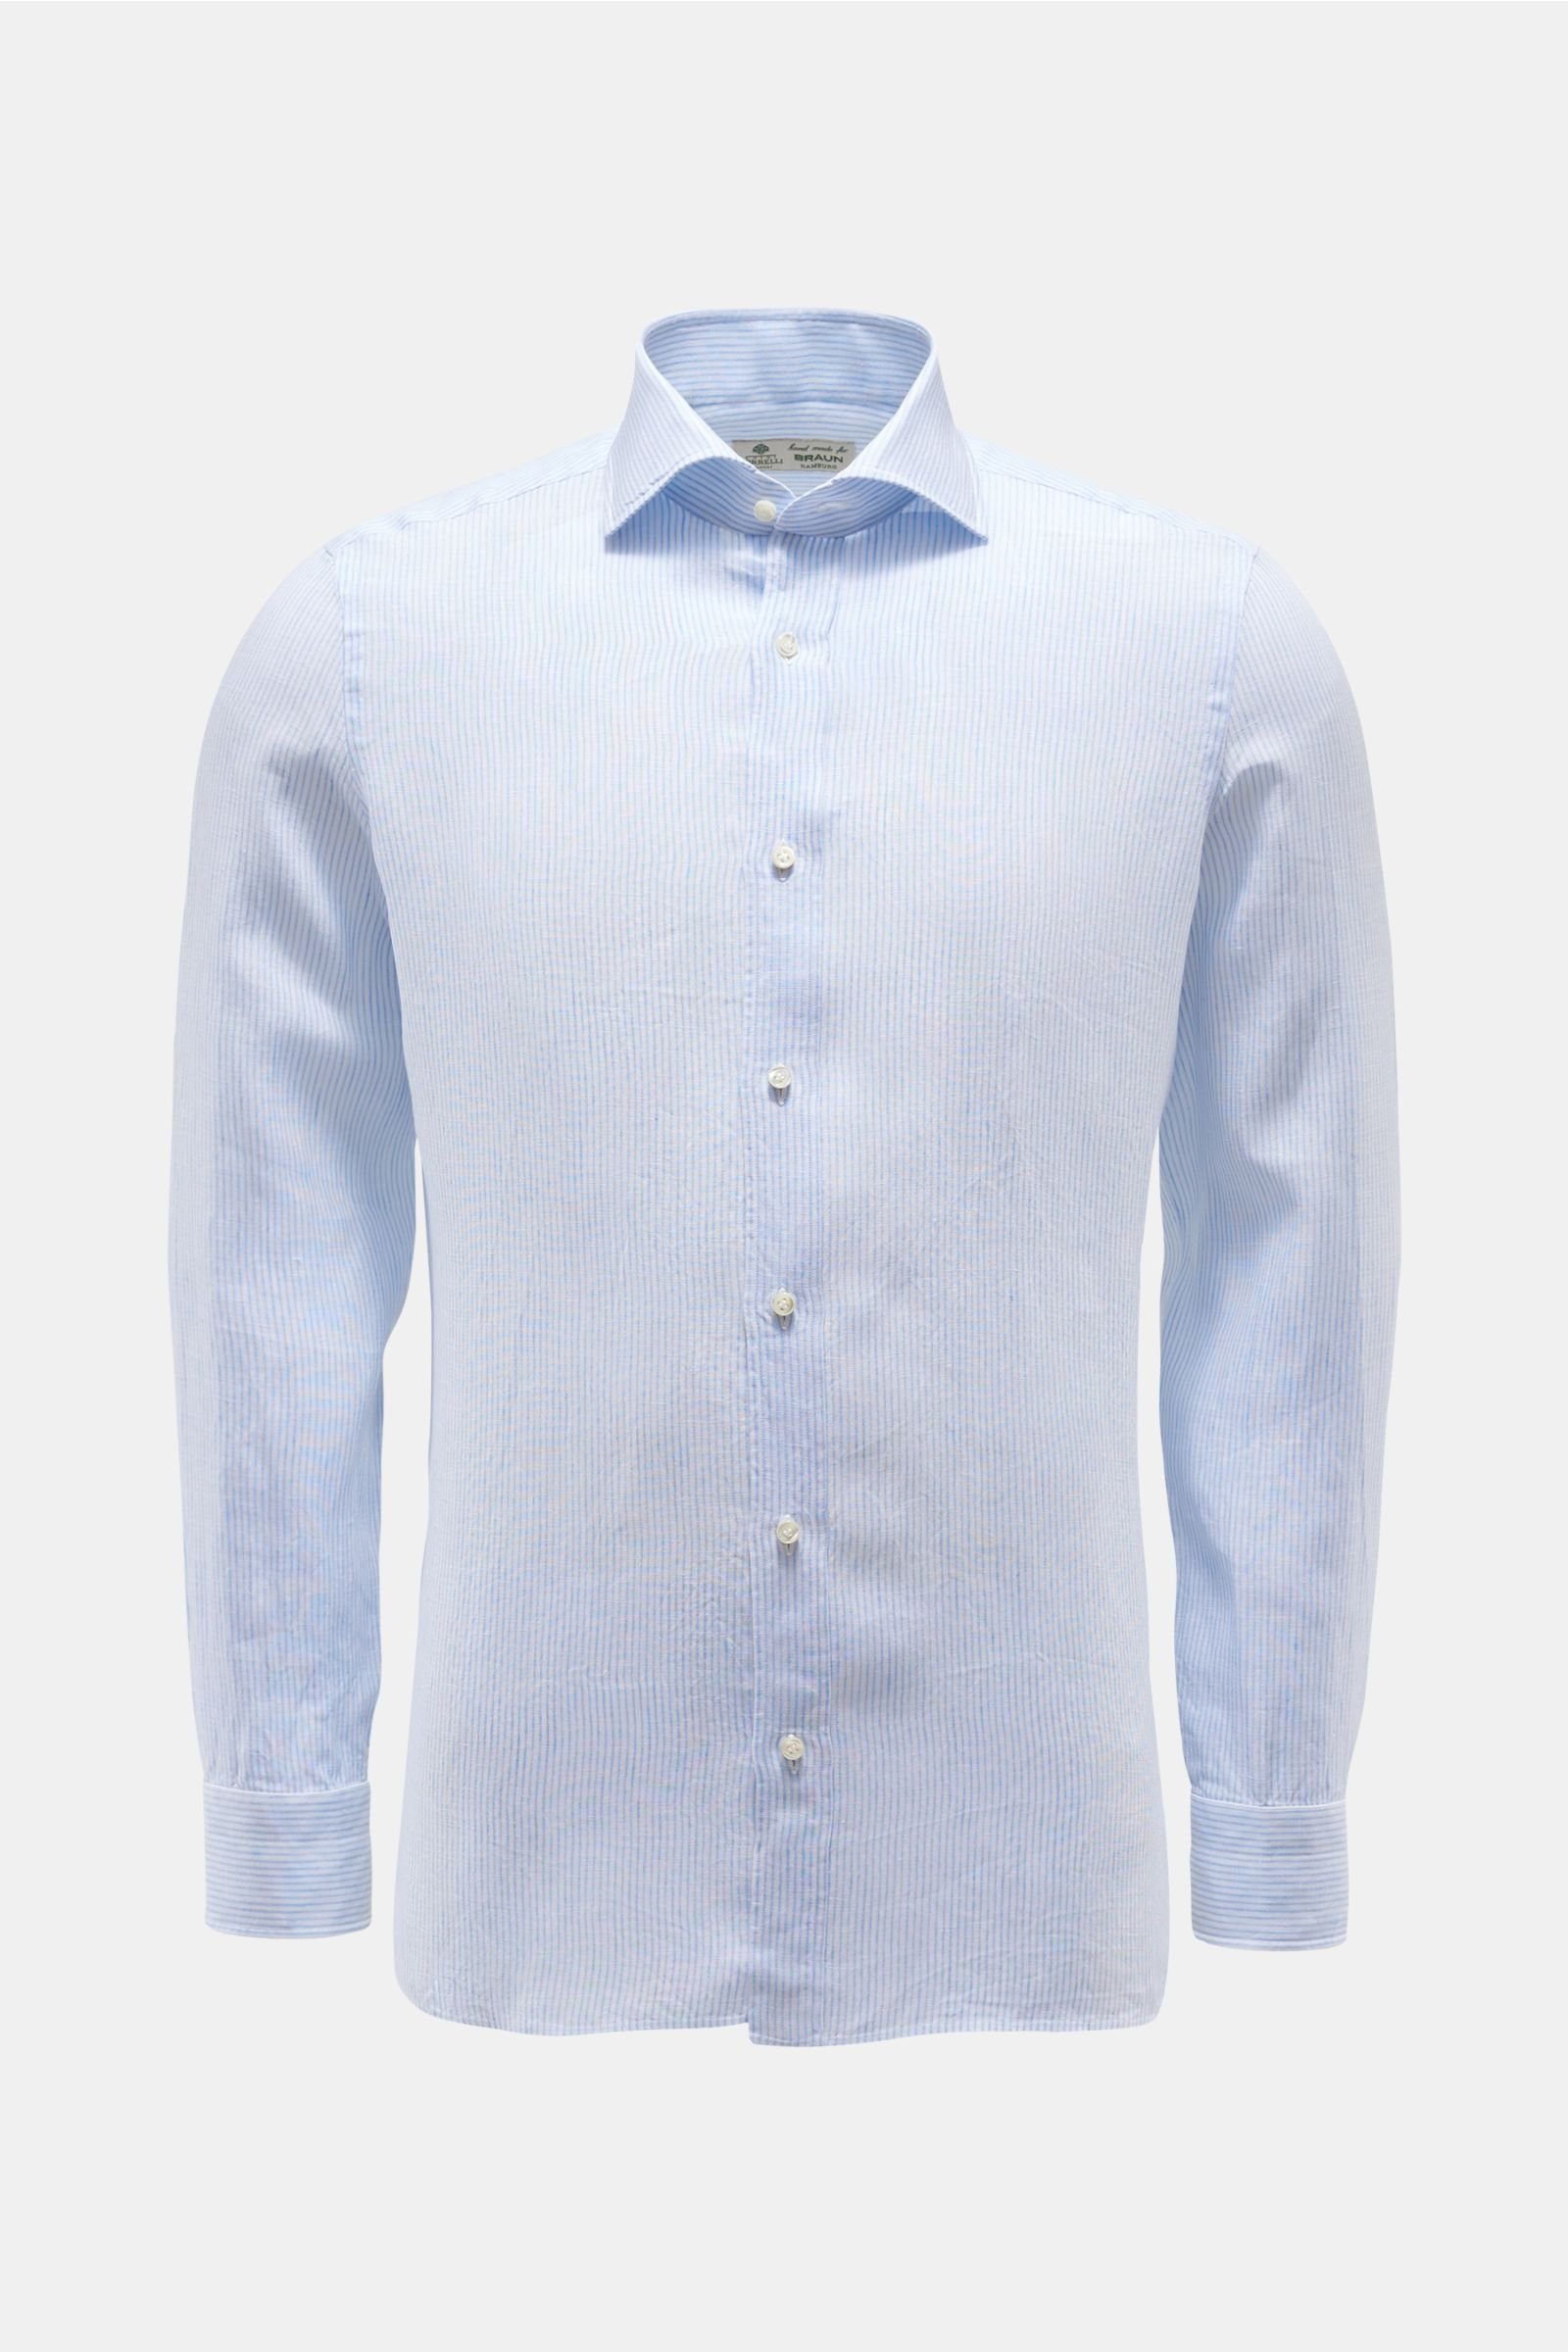 Linen shirt 'Ettore' shark collar light blue/white striped